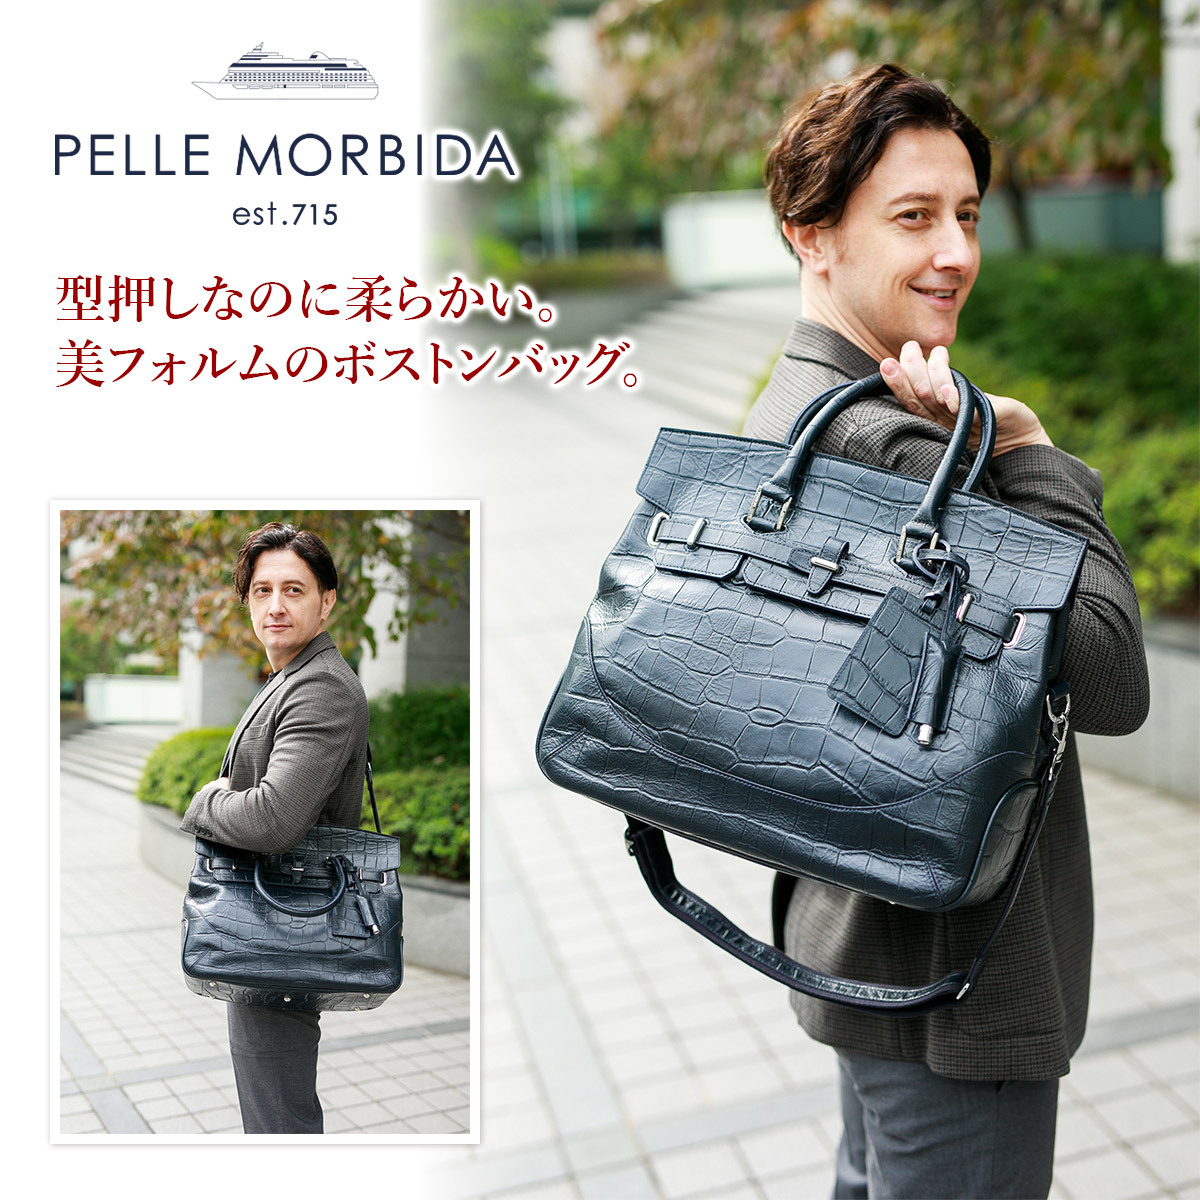 PELLE MORBIDA リュック型ブリーフバッグ - 通販 - gofukuyasan.com